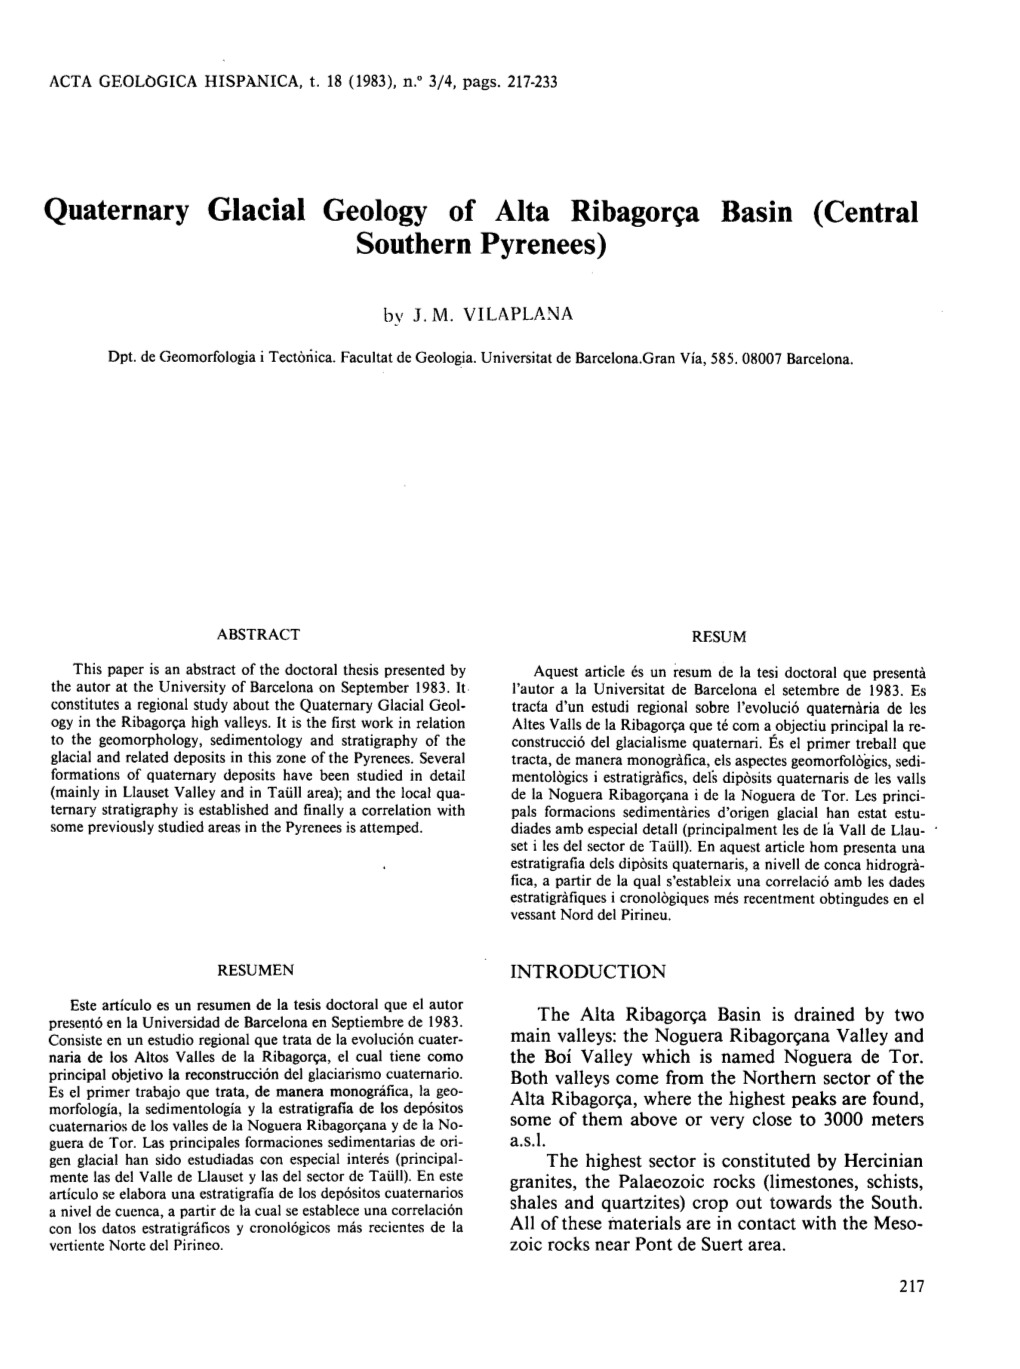 Quaternary Glacial Geology of Alta Ribagorqa Basin (Central Southern Pyrenees)